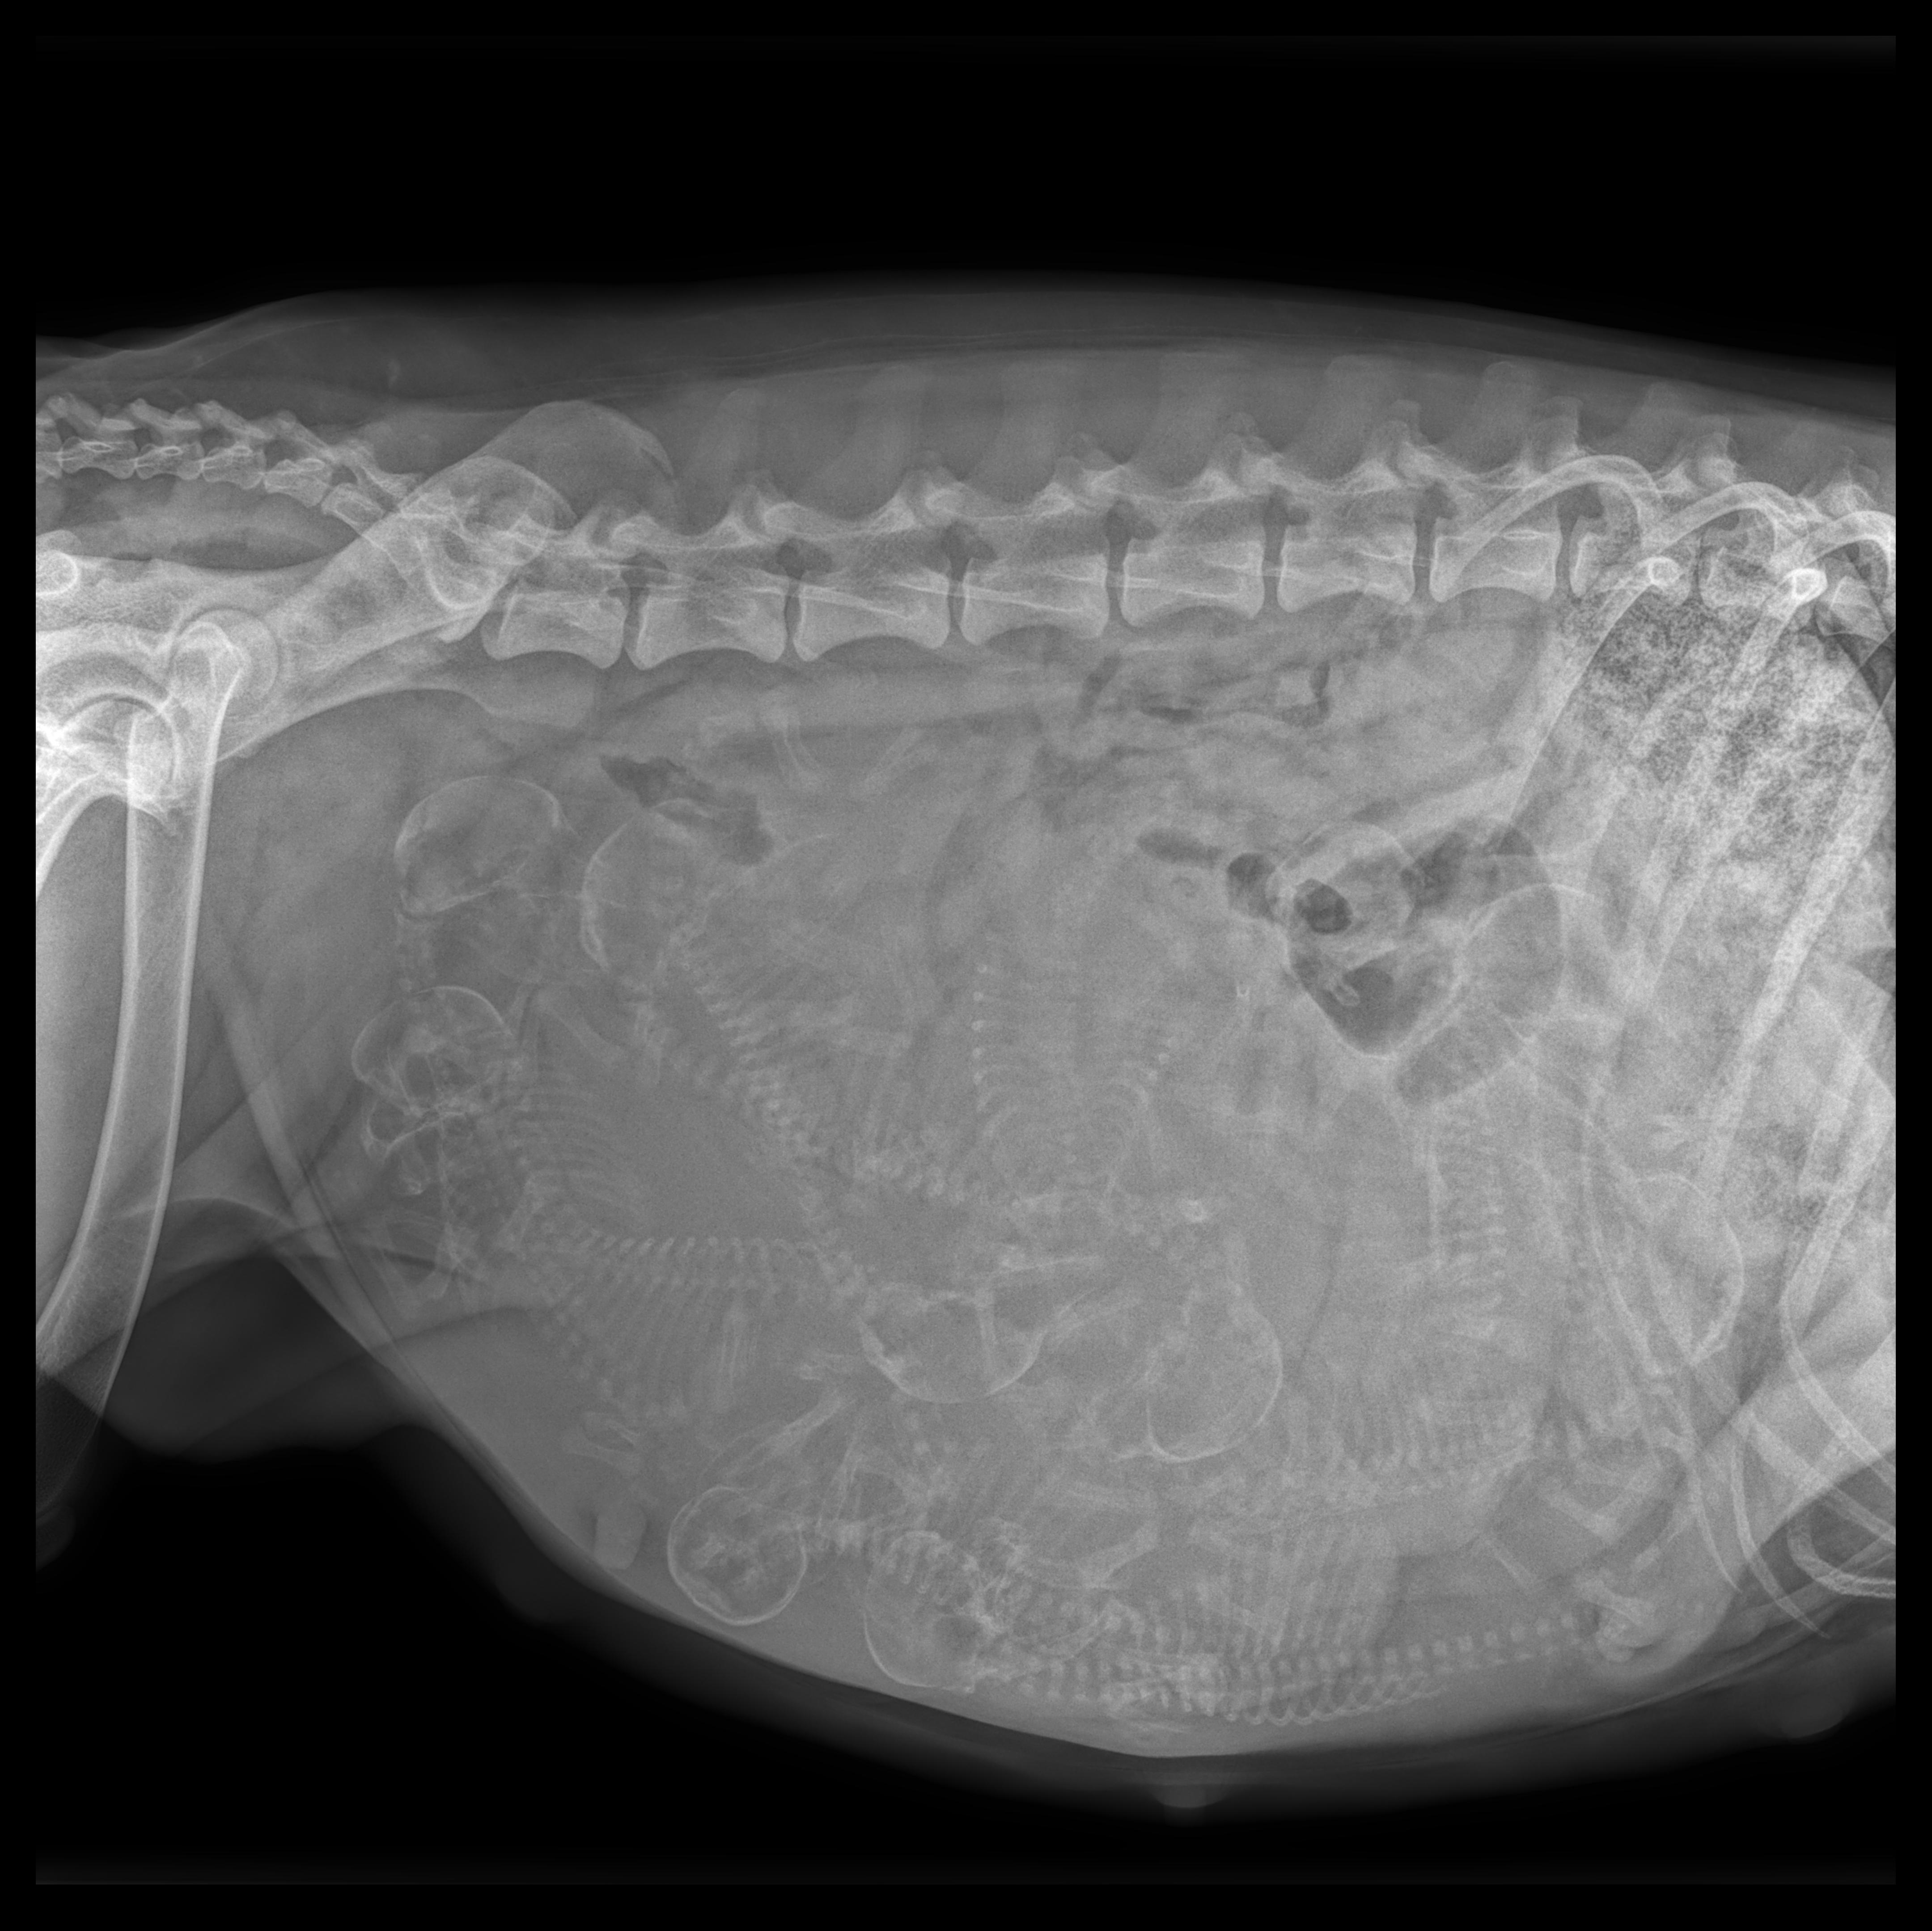 Radiograph of abdomen full of puppies